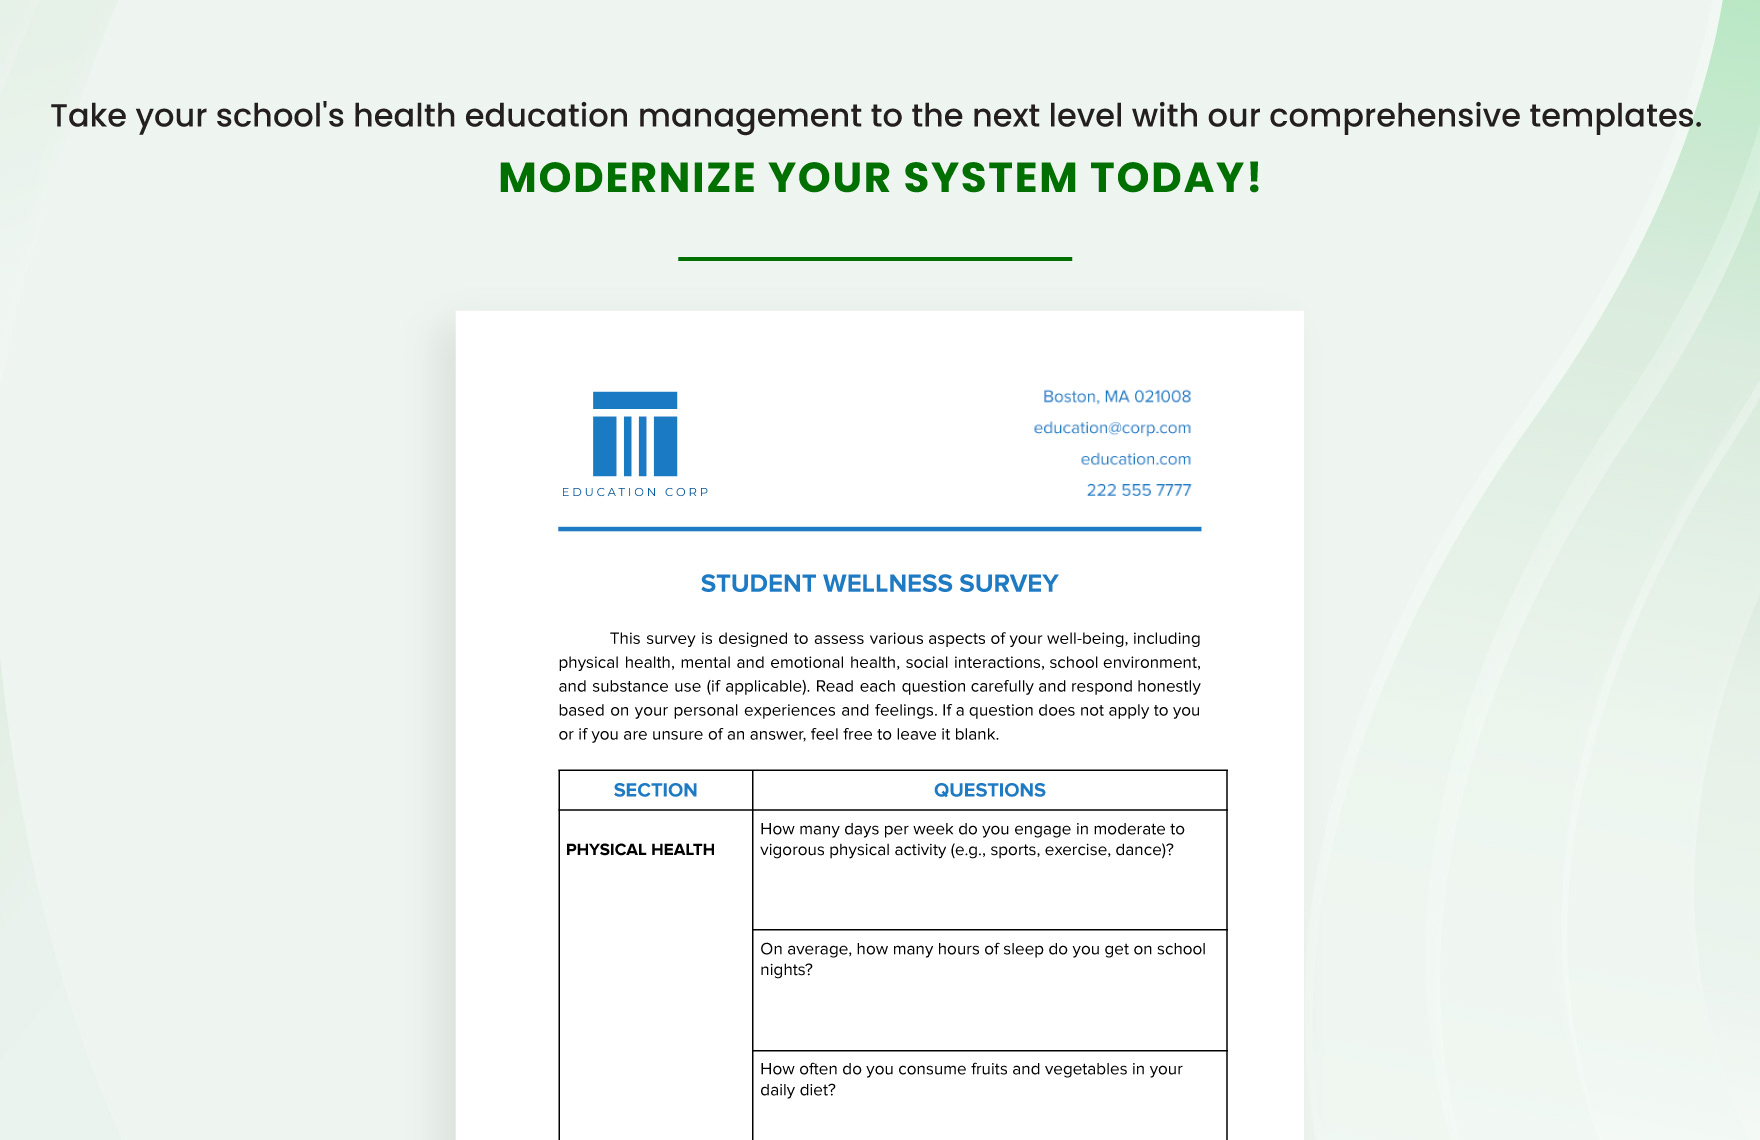 Student Wellness Survey Template